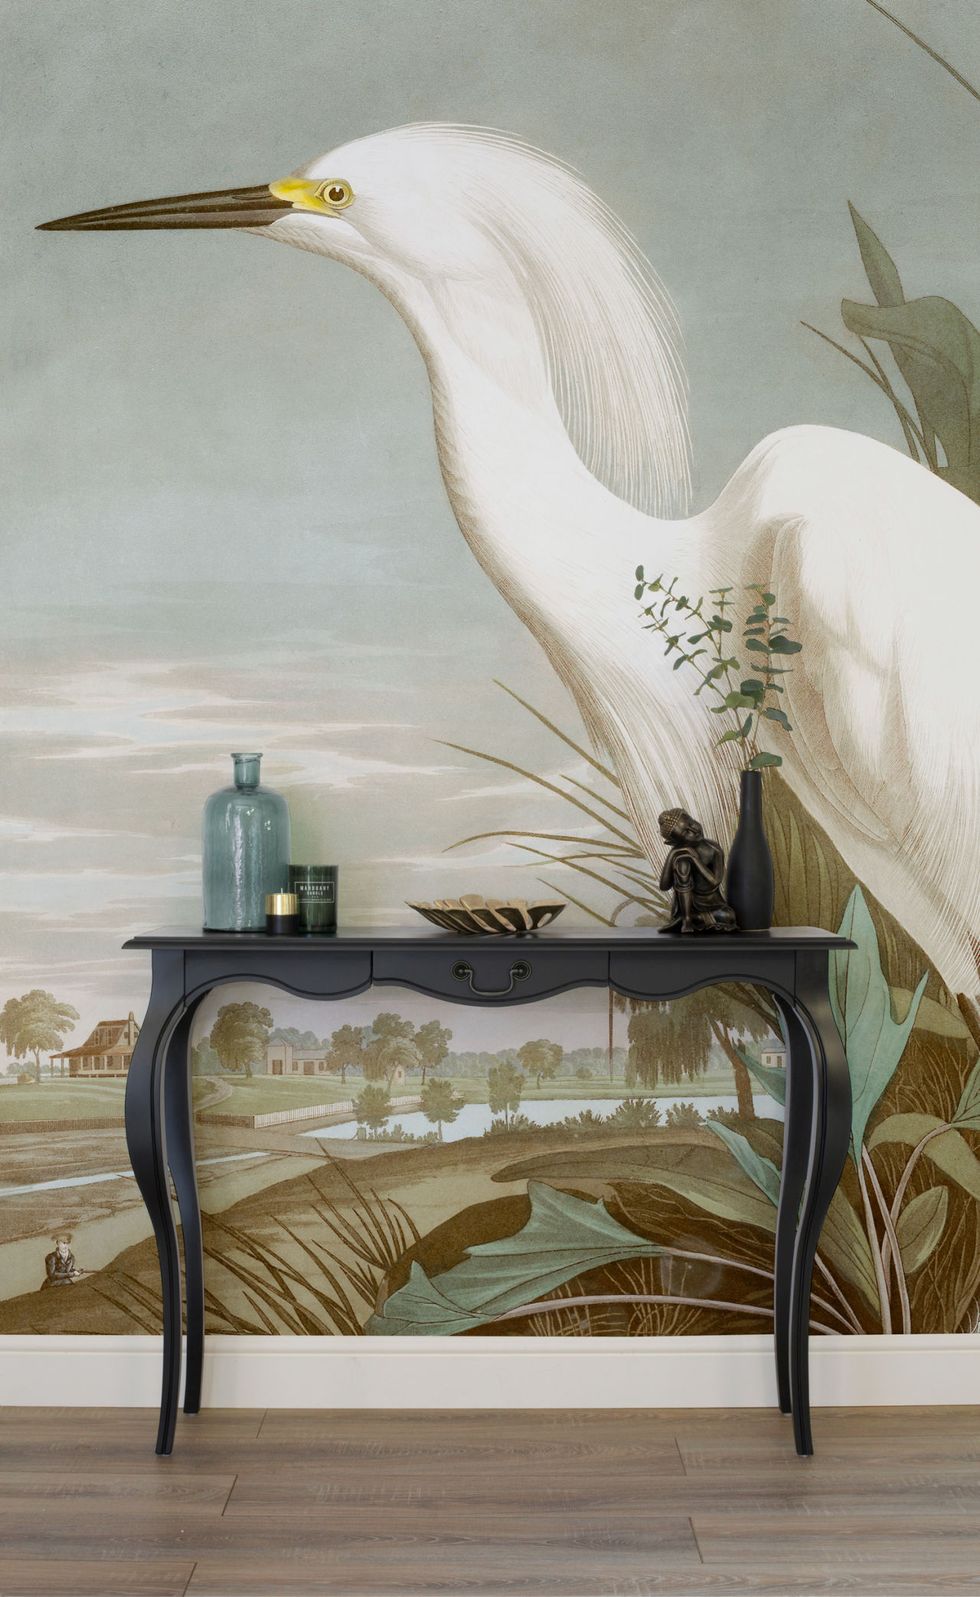 The Audubon Collection - birds - Murals Wallpaper.
Illustrations by J.J. Audubon, The Birds of America